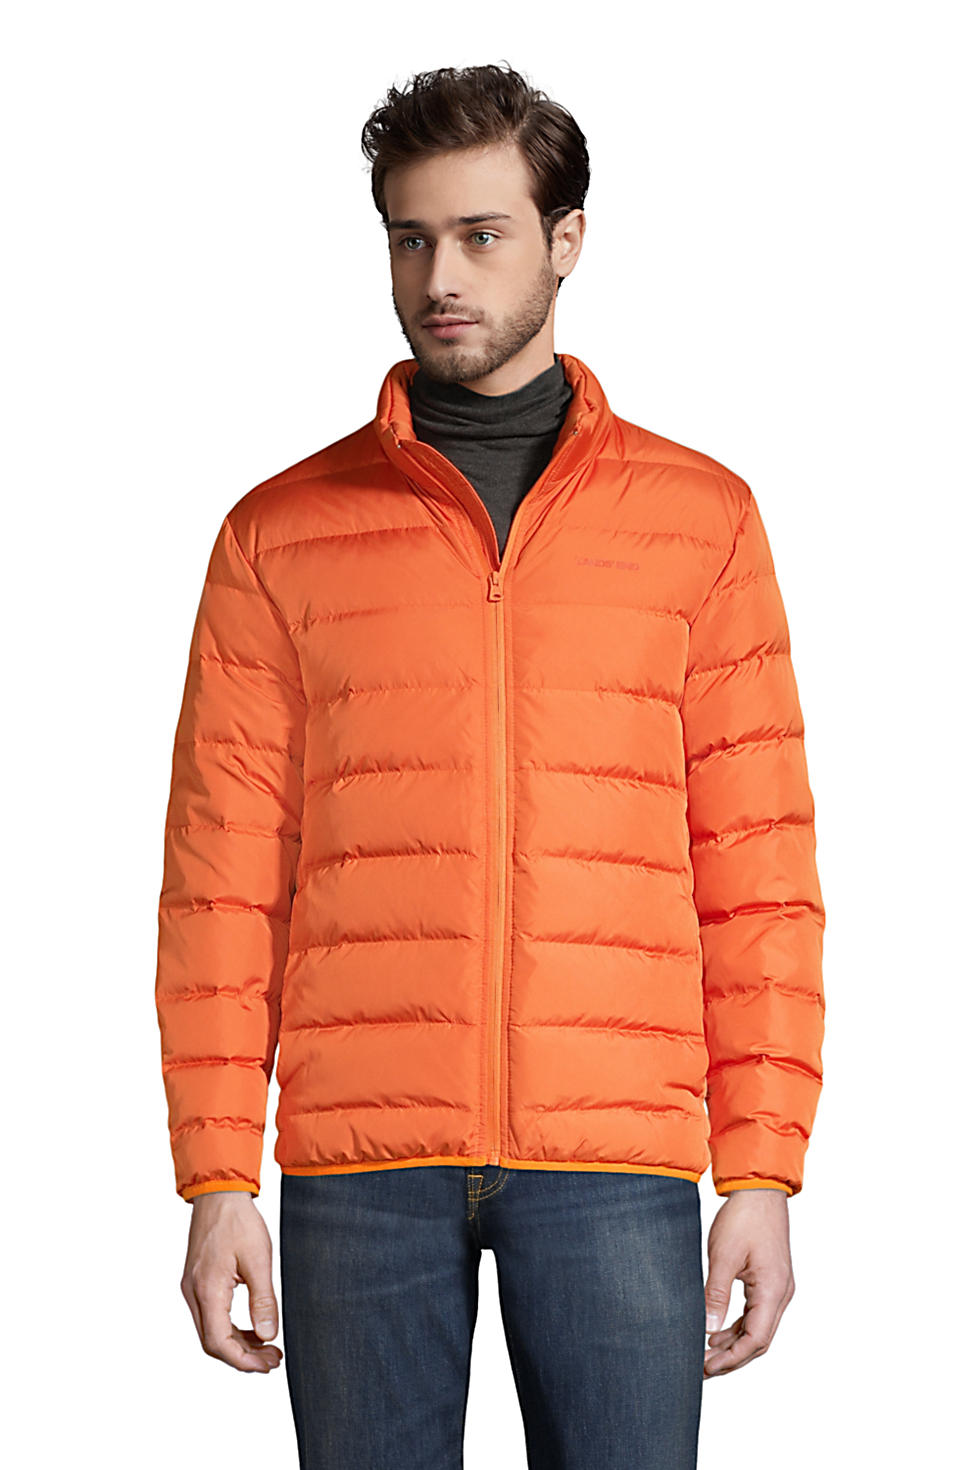 Lands' End Men's 600 Down Puffer Winter Jacket (3 color options)